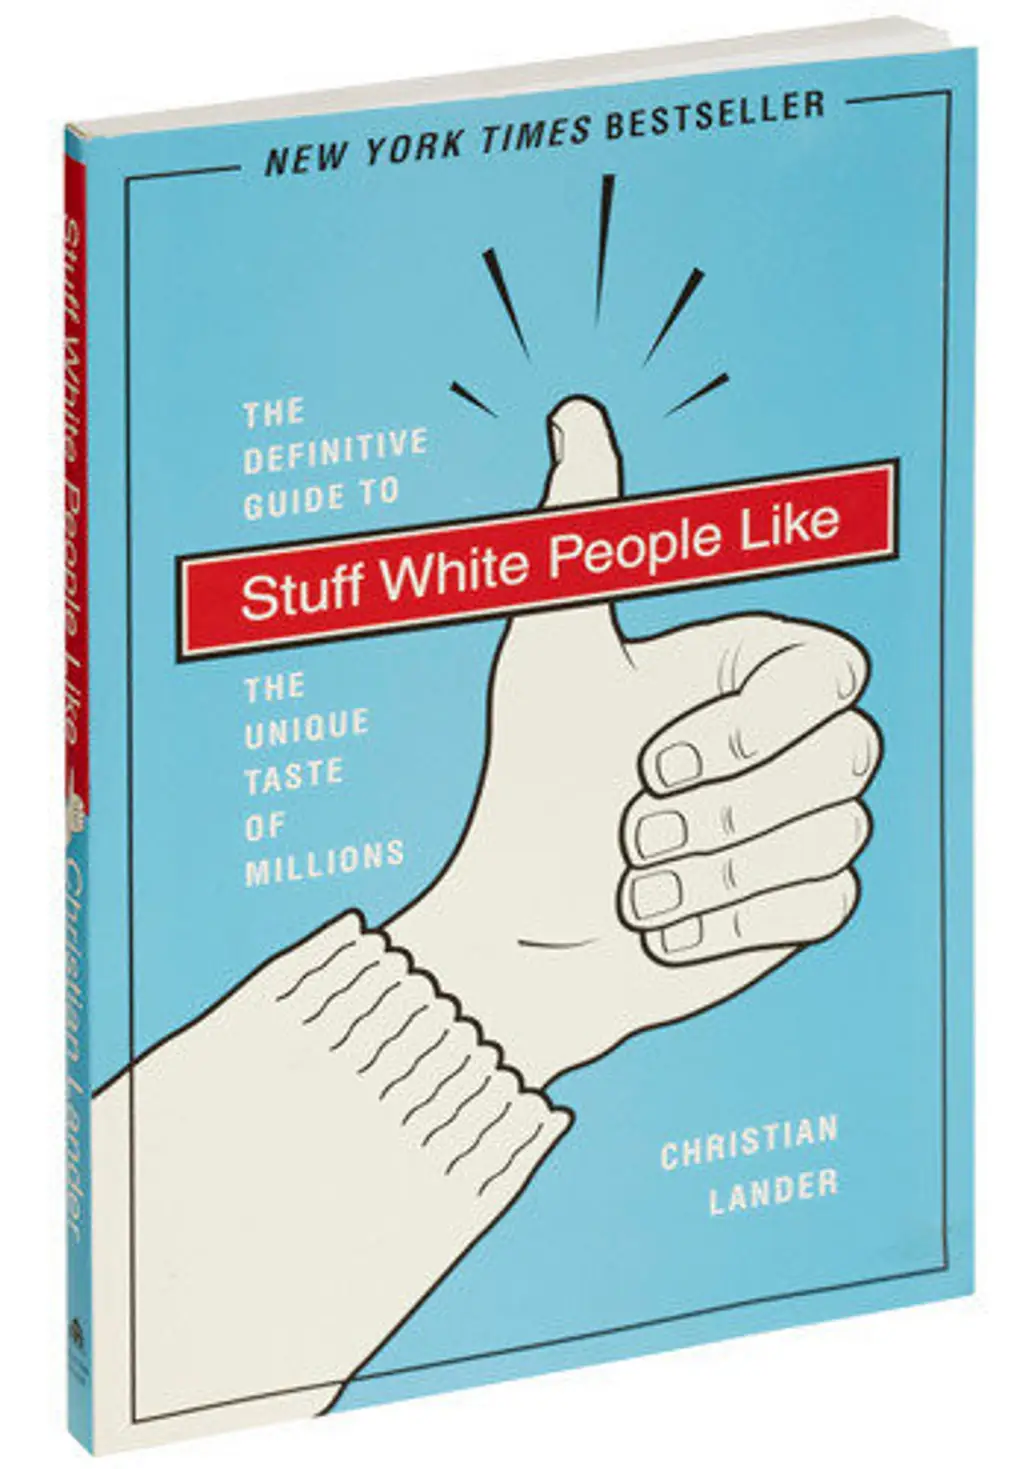 “Stuff White People like” by Christian Lander